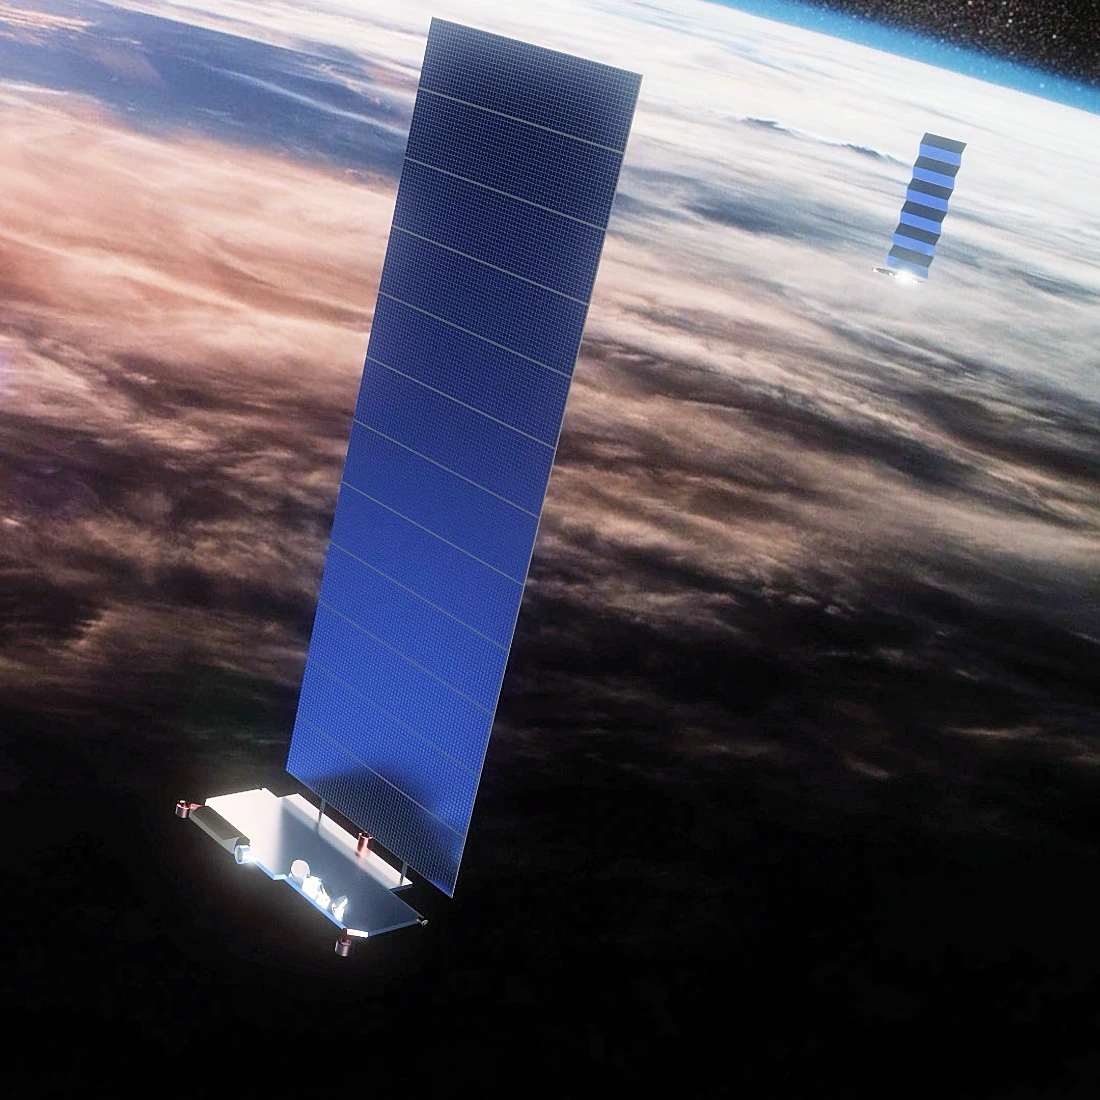 Starlink-satellites-in-orbit-around-the-earth